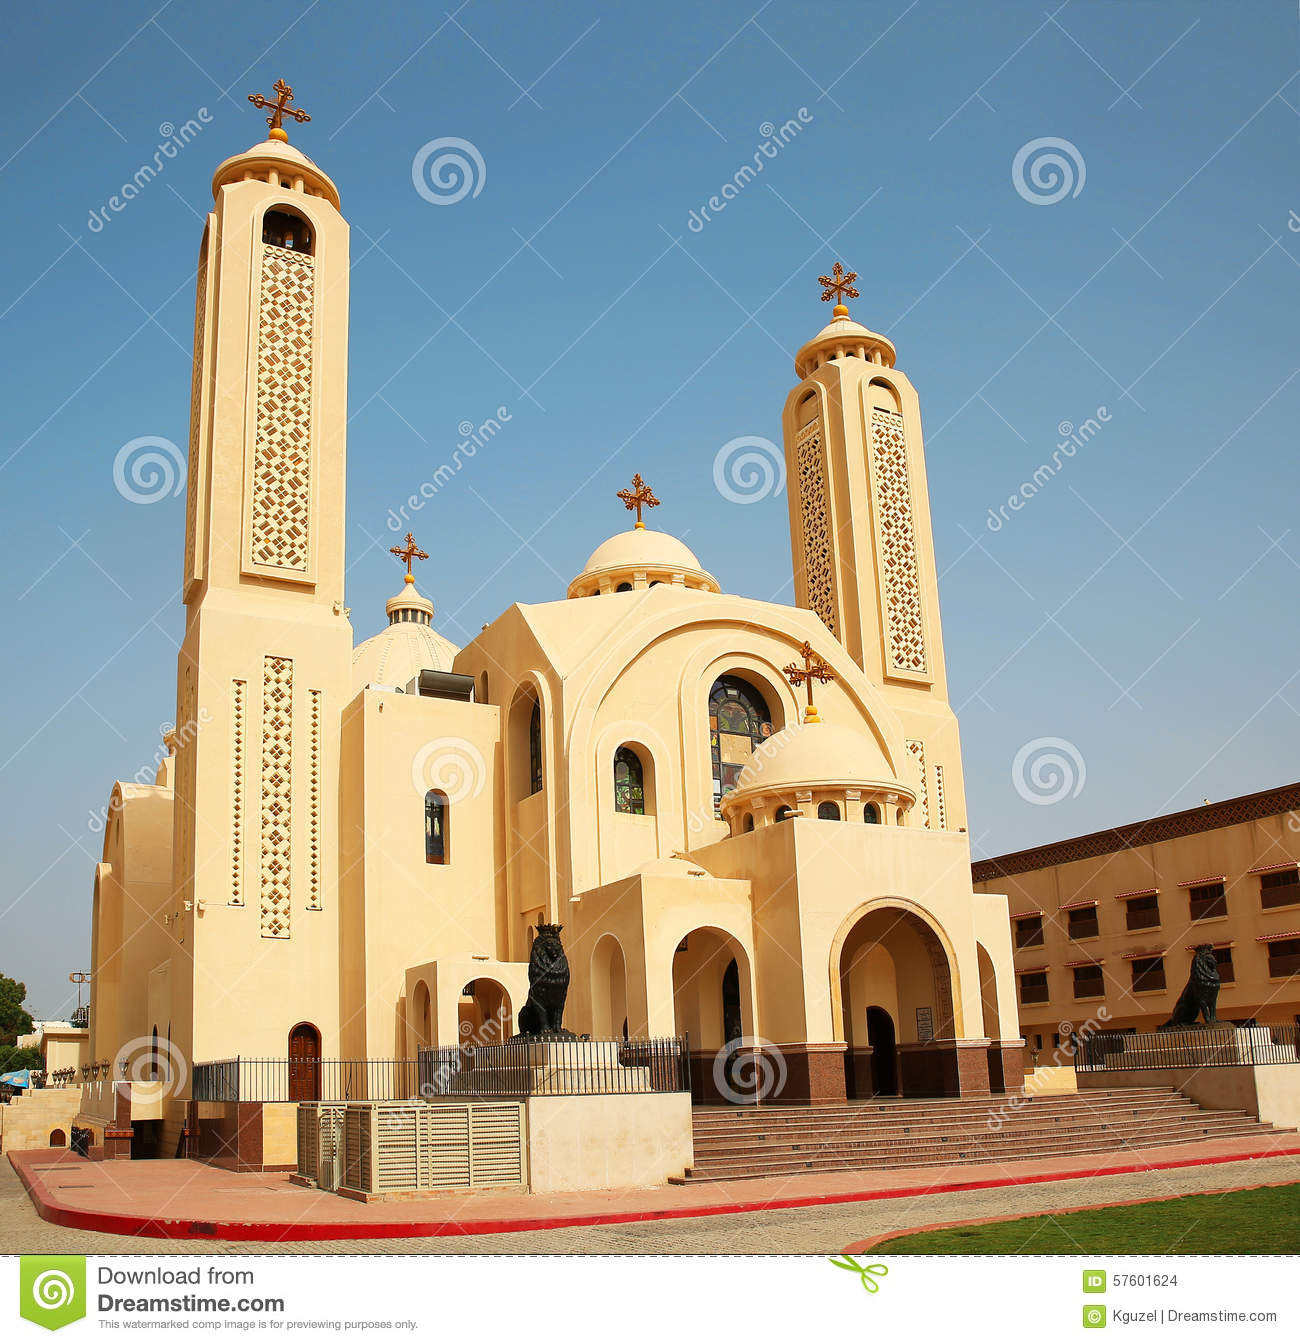 L'Église Orthodoxe Copte 4m9n